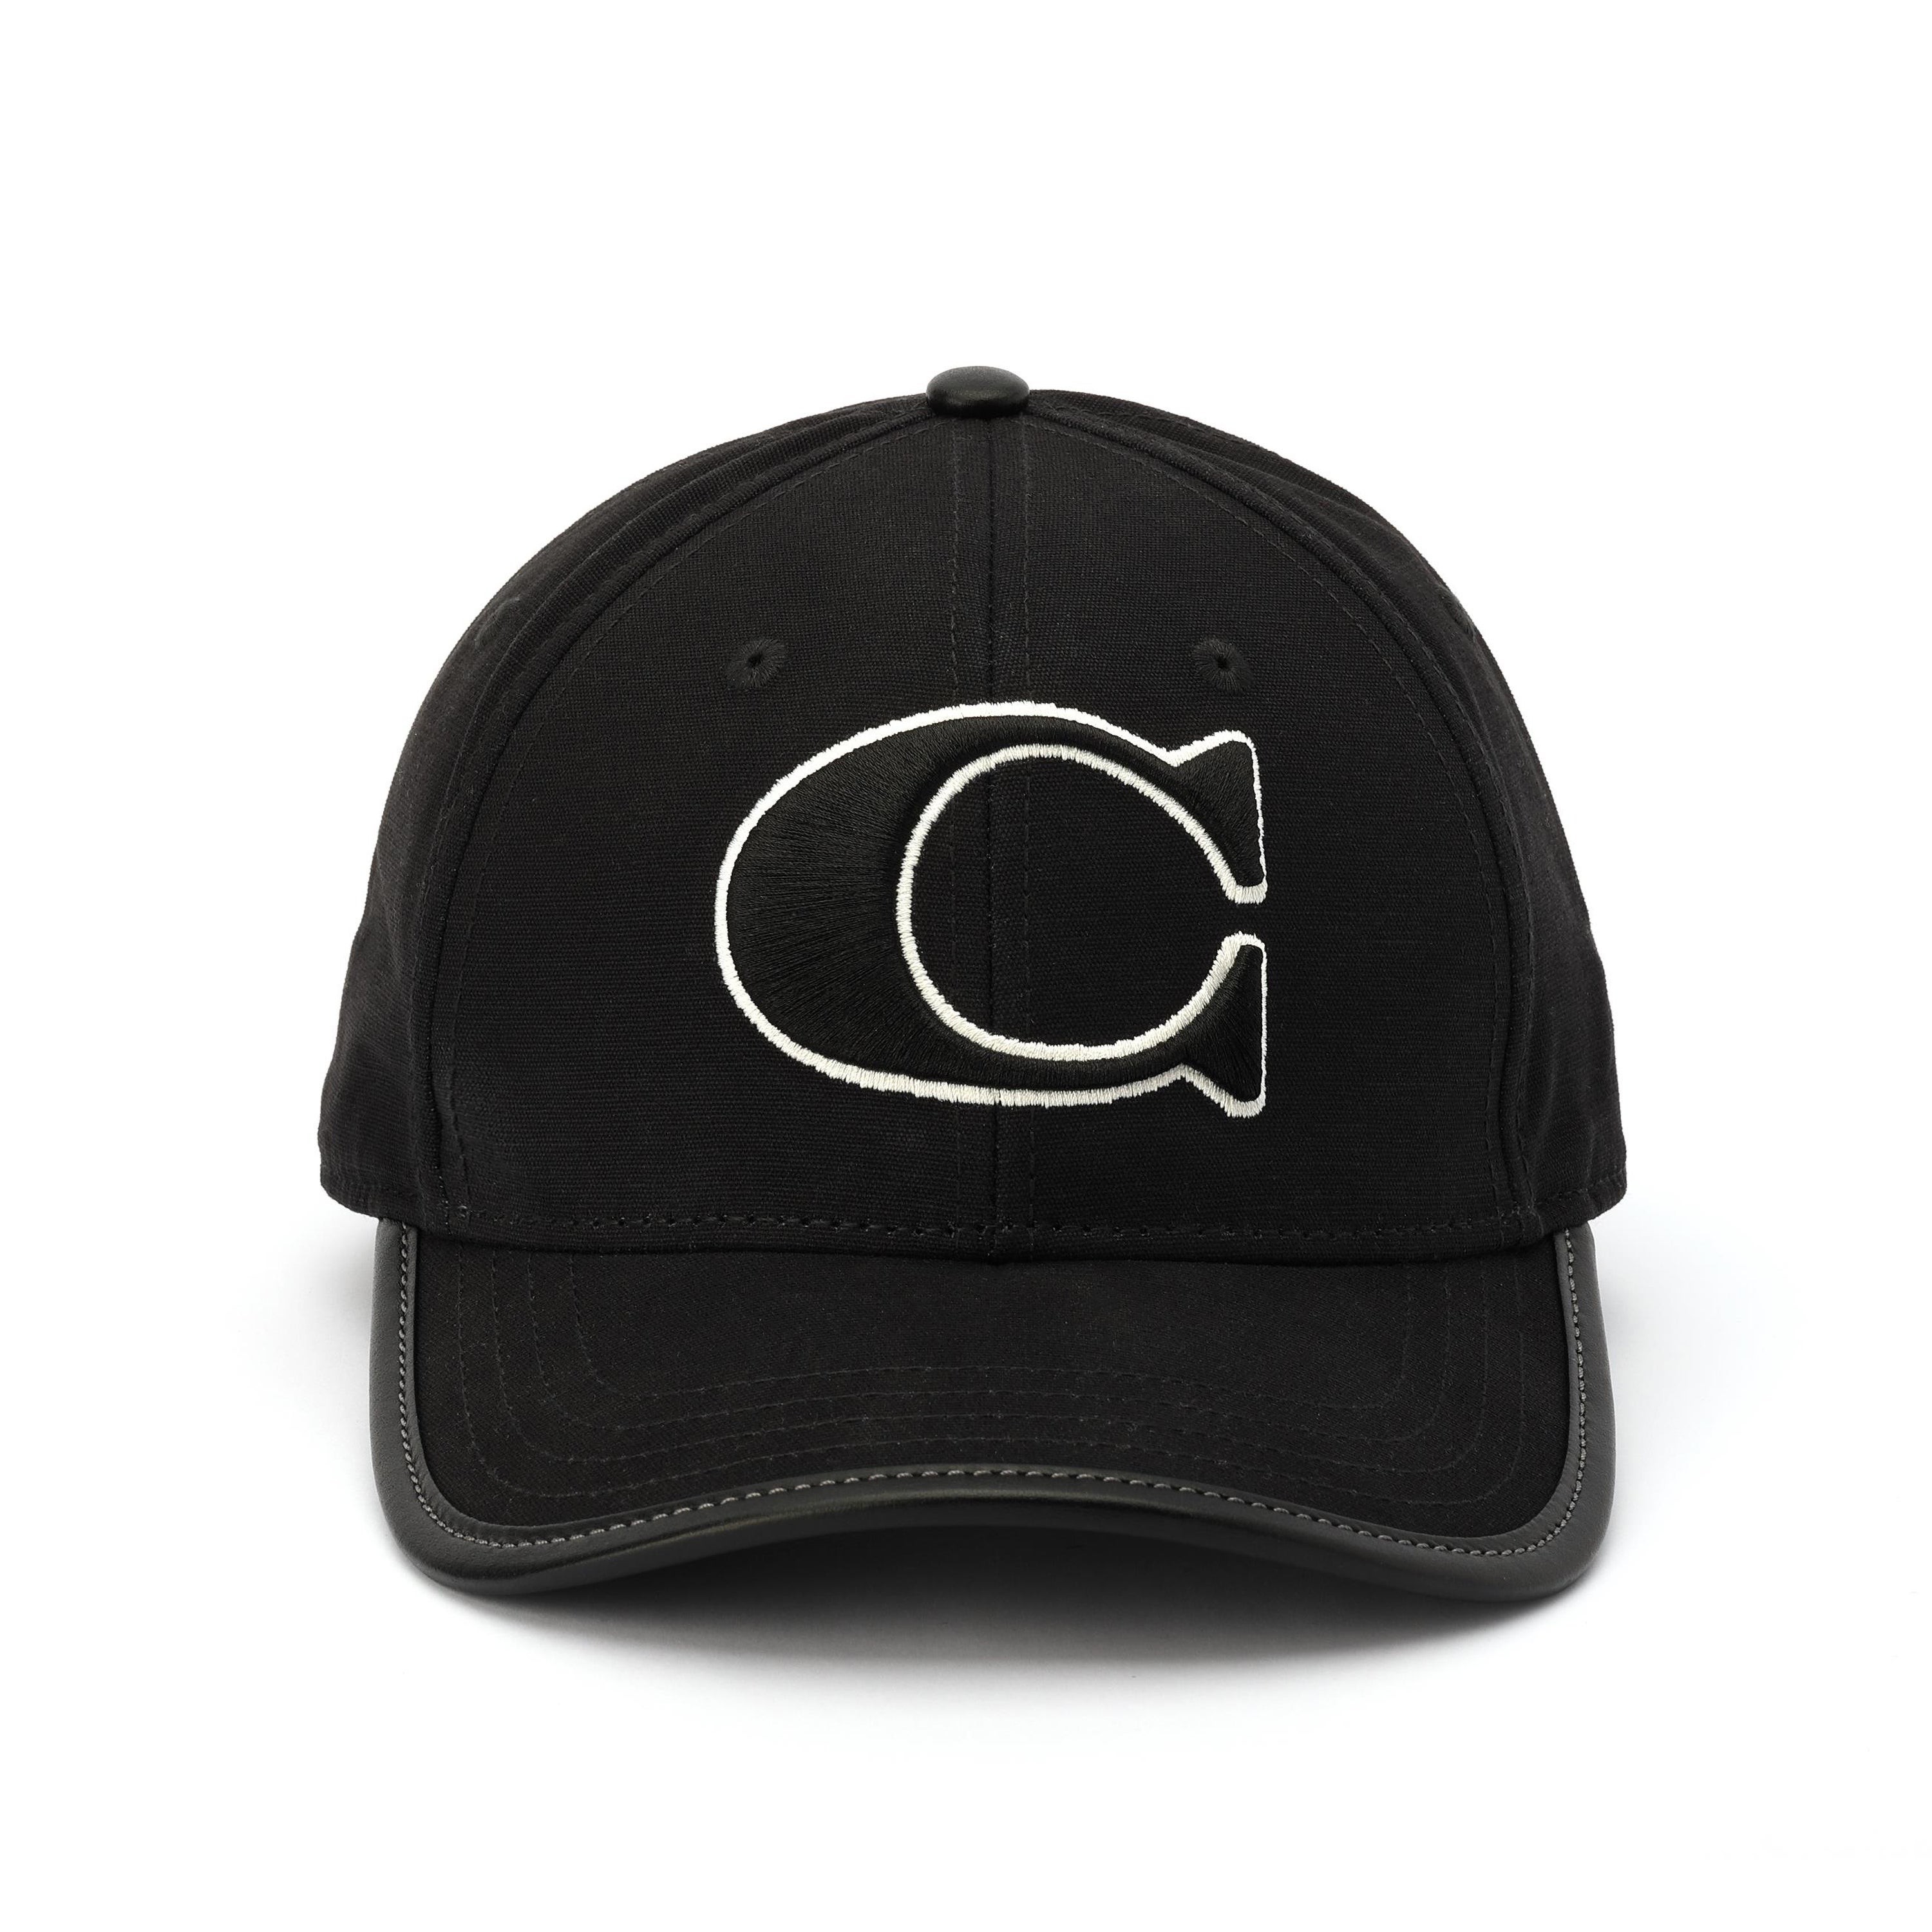 Coach "C" Baseball Cap Black